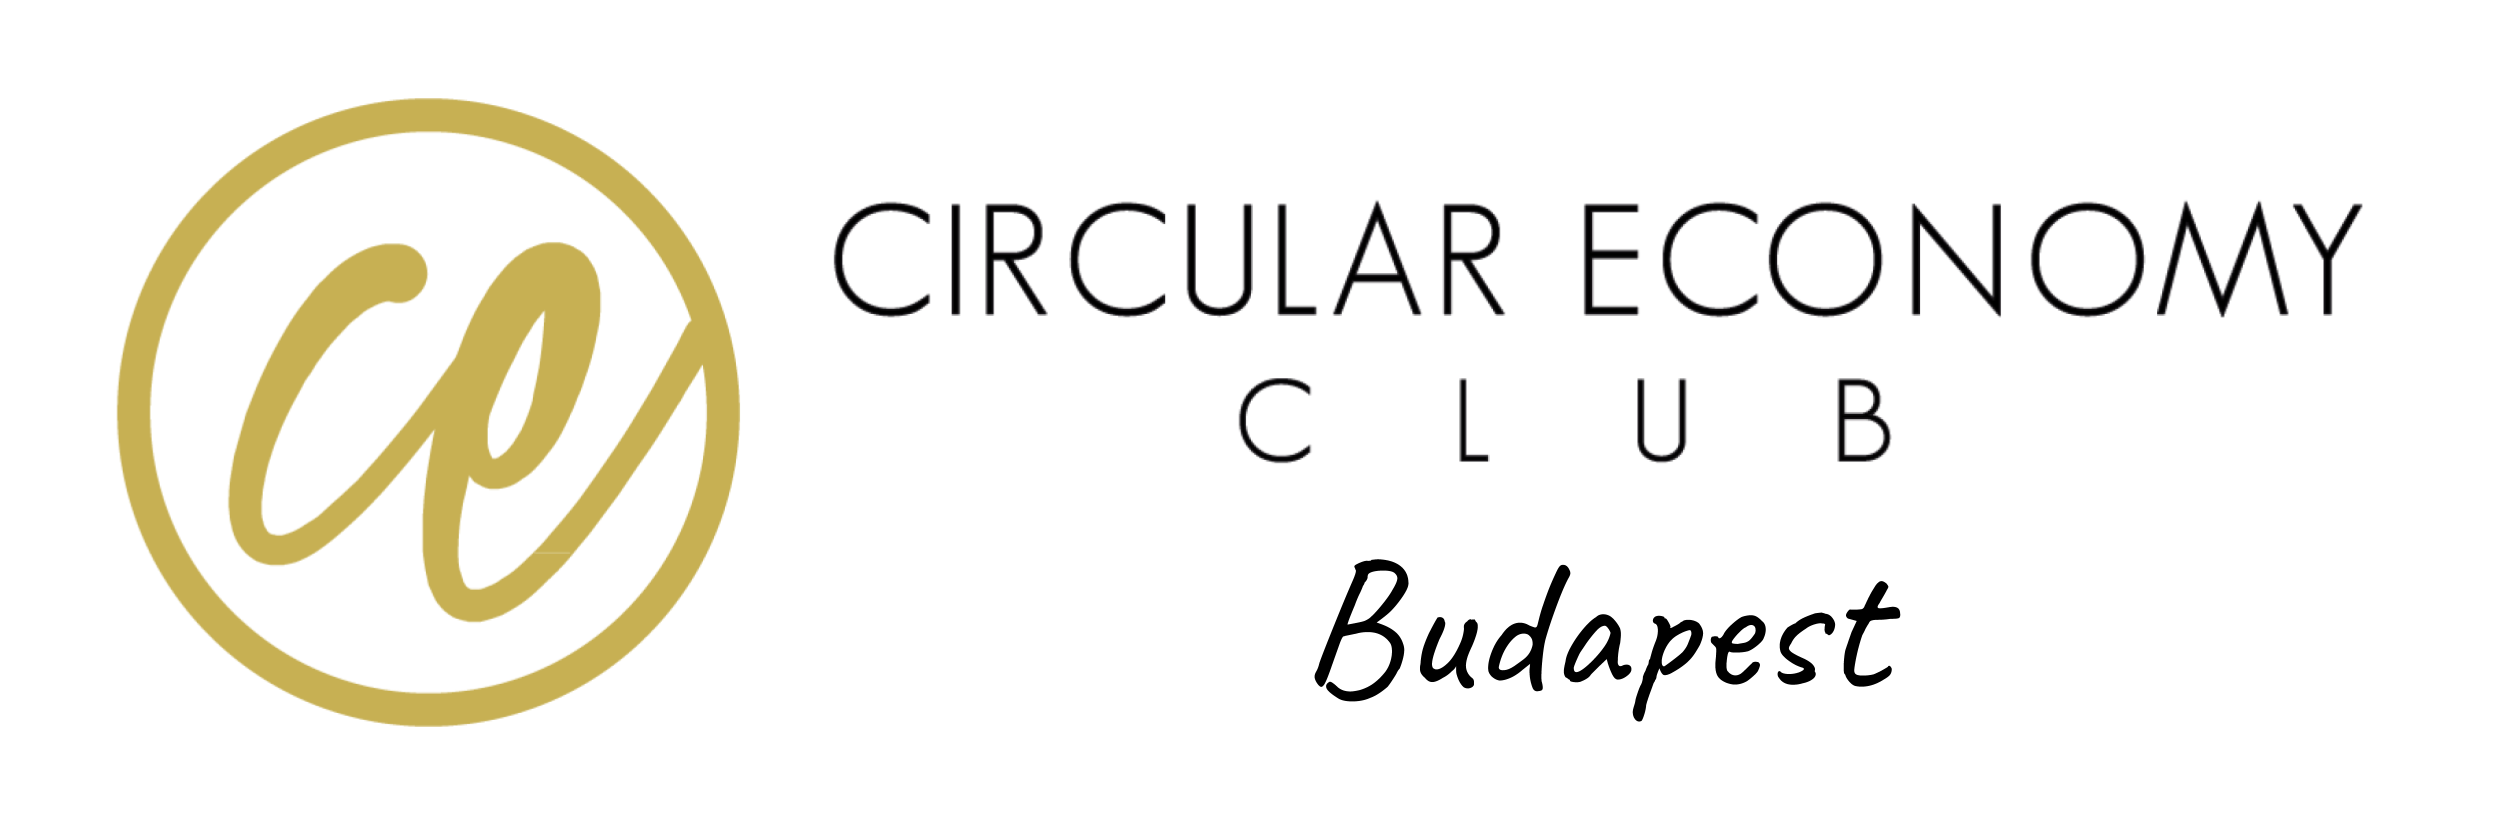 Circular Economy Club